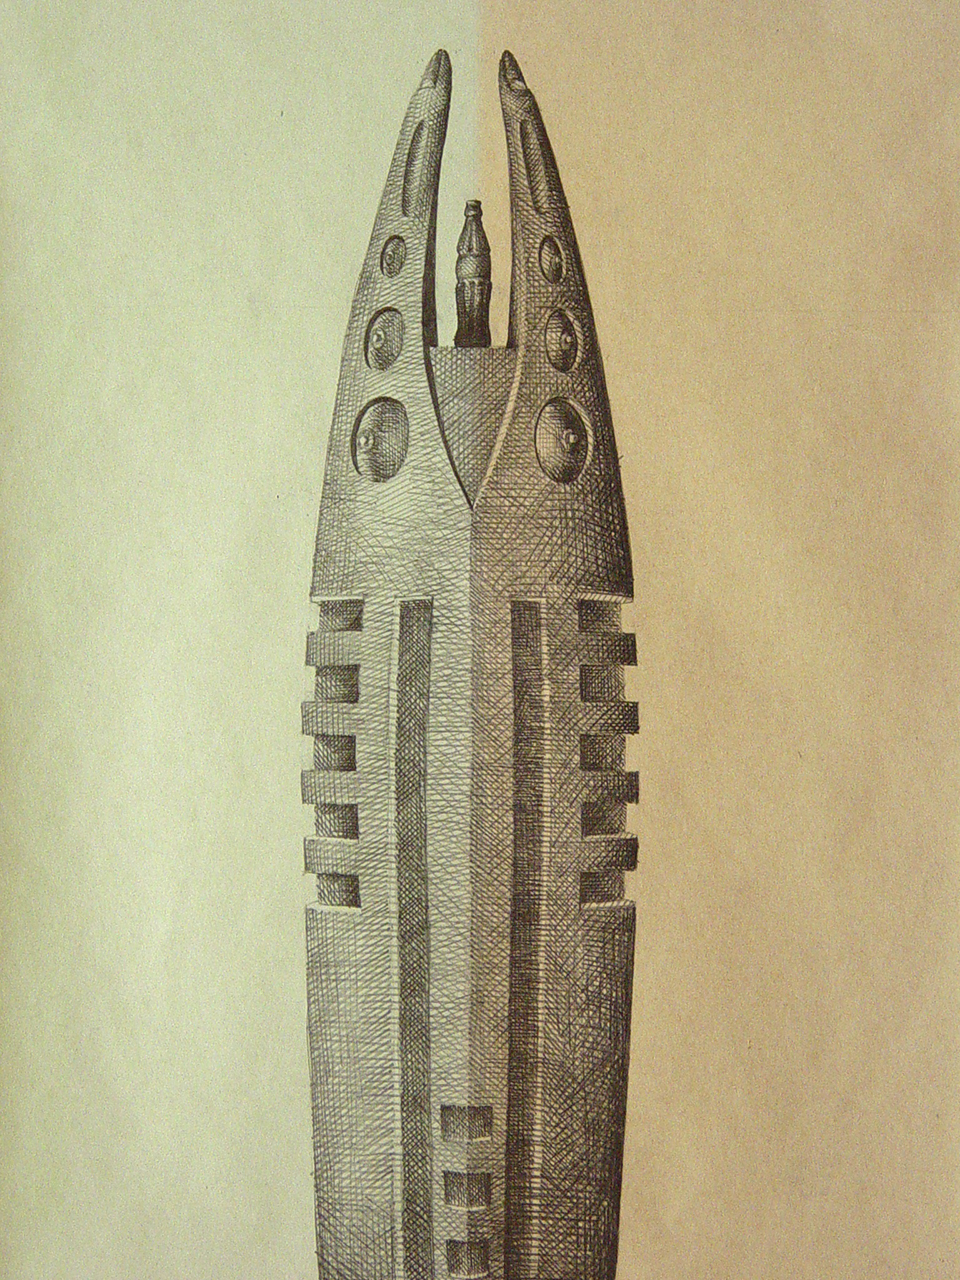 technique: pencil on paper dimension: 30 x 21 cm year: 2001